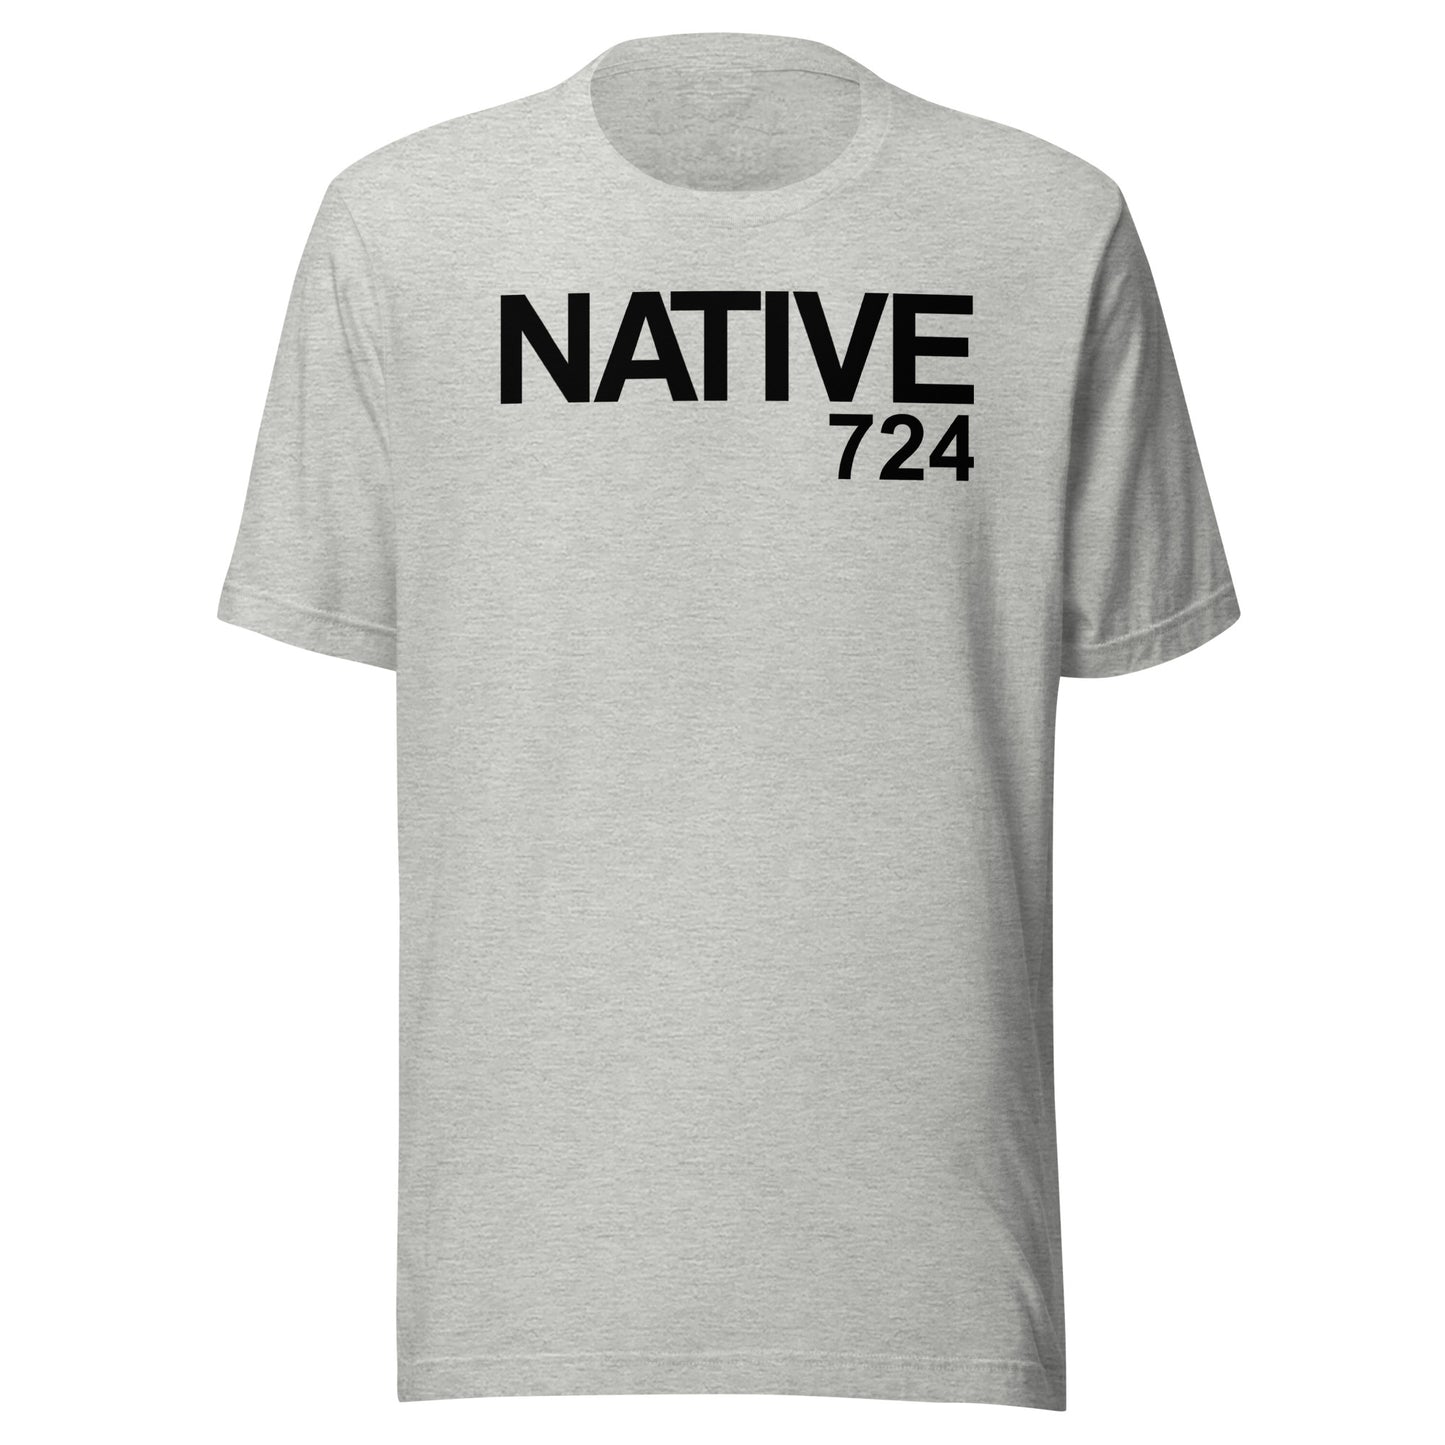 NATIVE 724 Classic Grey & Black T-Shirt